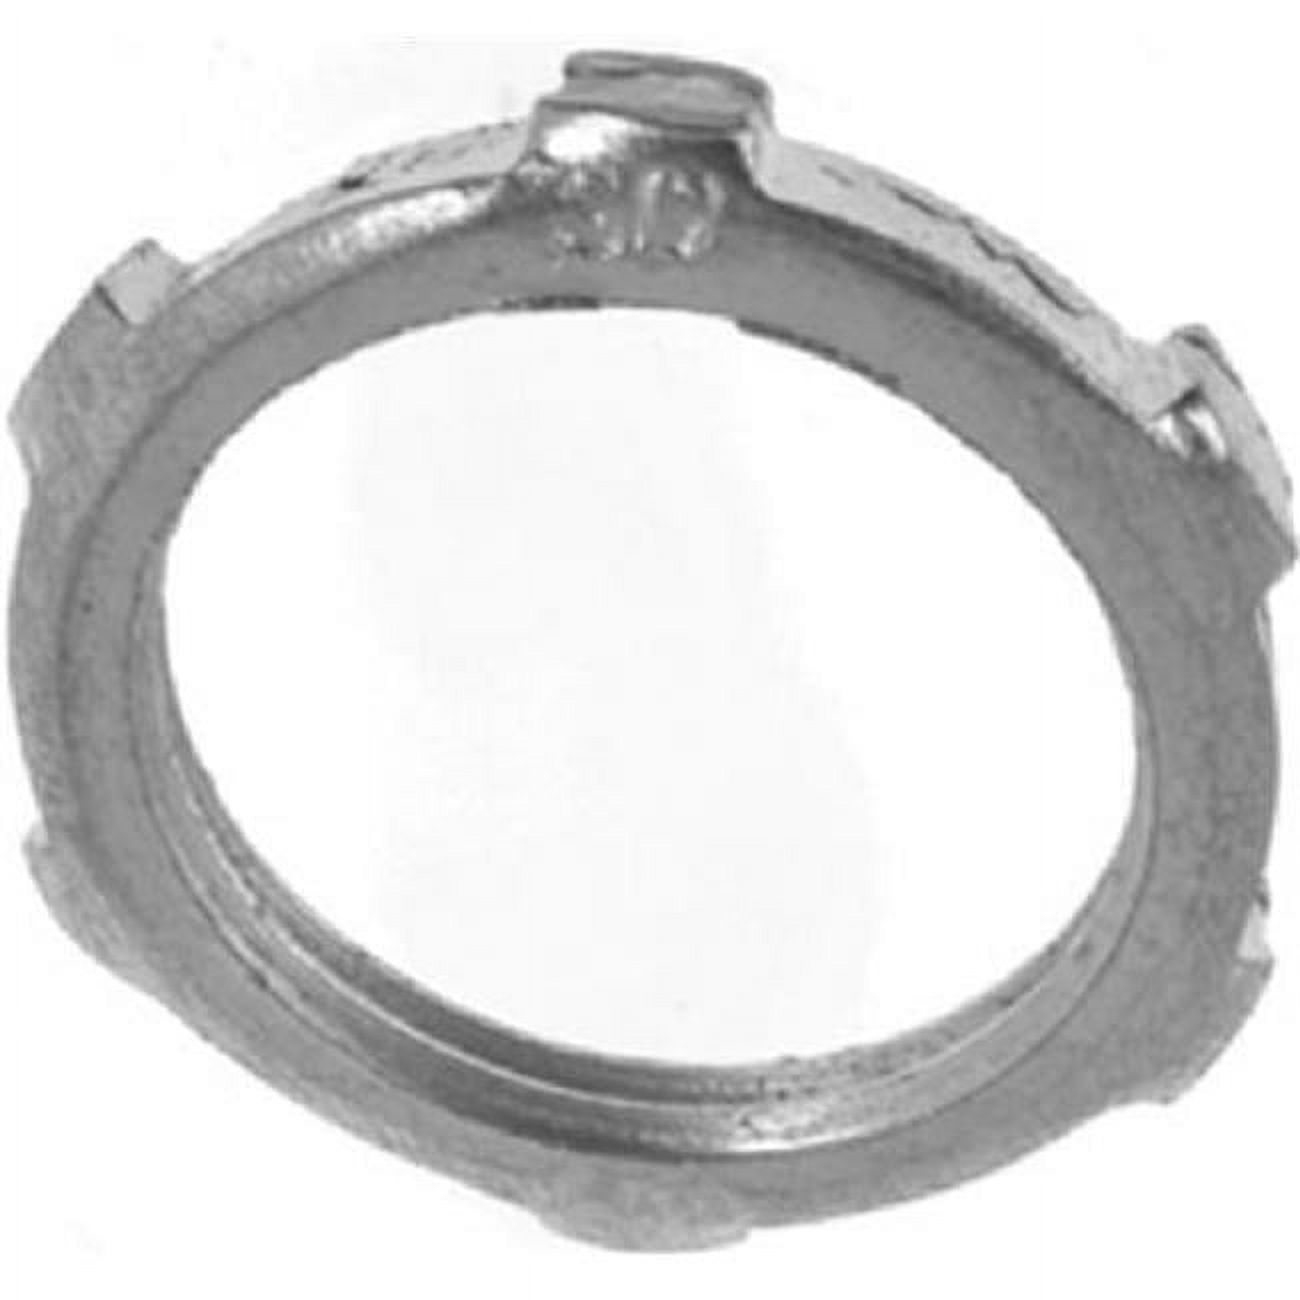 Halex 91920 2 in. Steel Locknut Zinc Plated - image 1 of 1